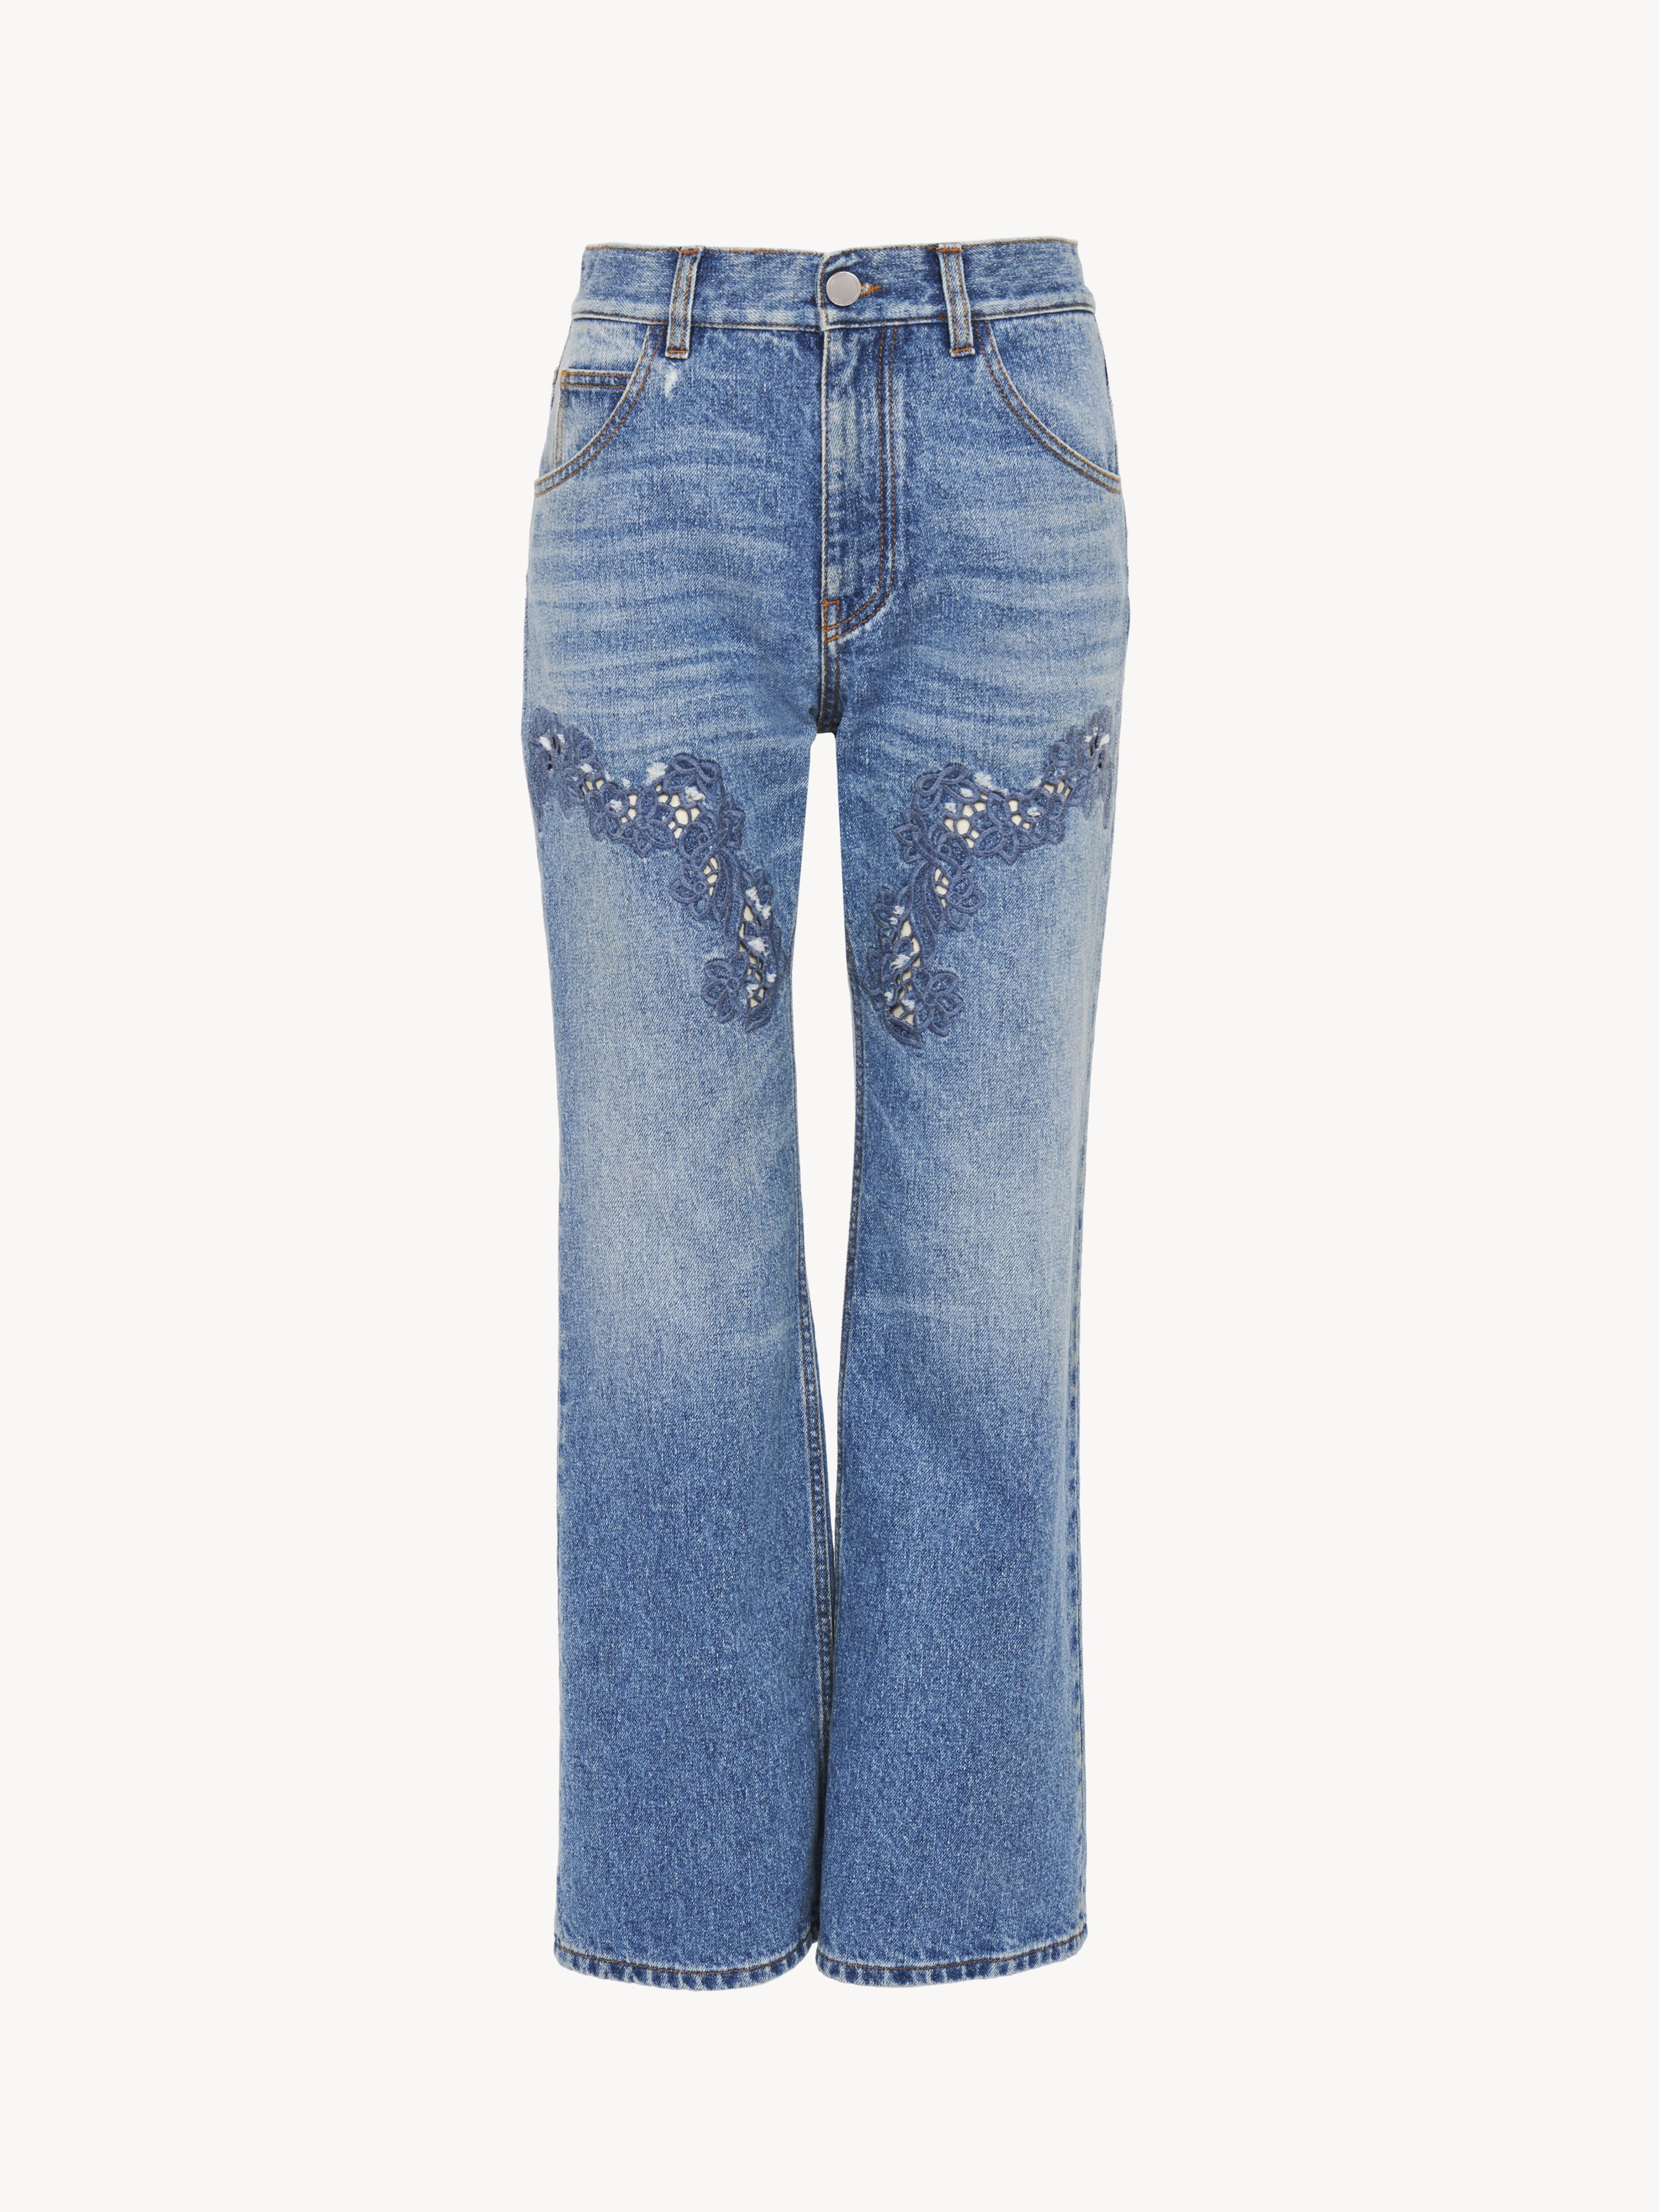 Chloé Cropped Bootcut Jeans Blue Size 31 100% Cotton